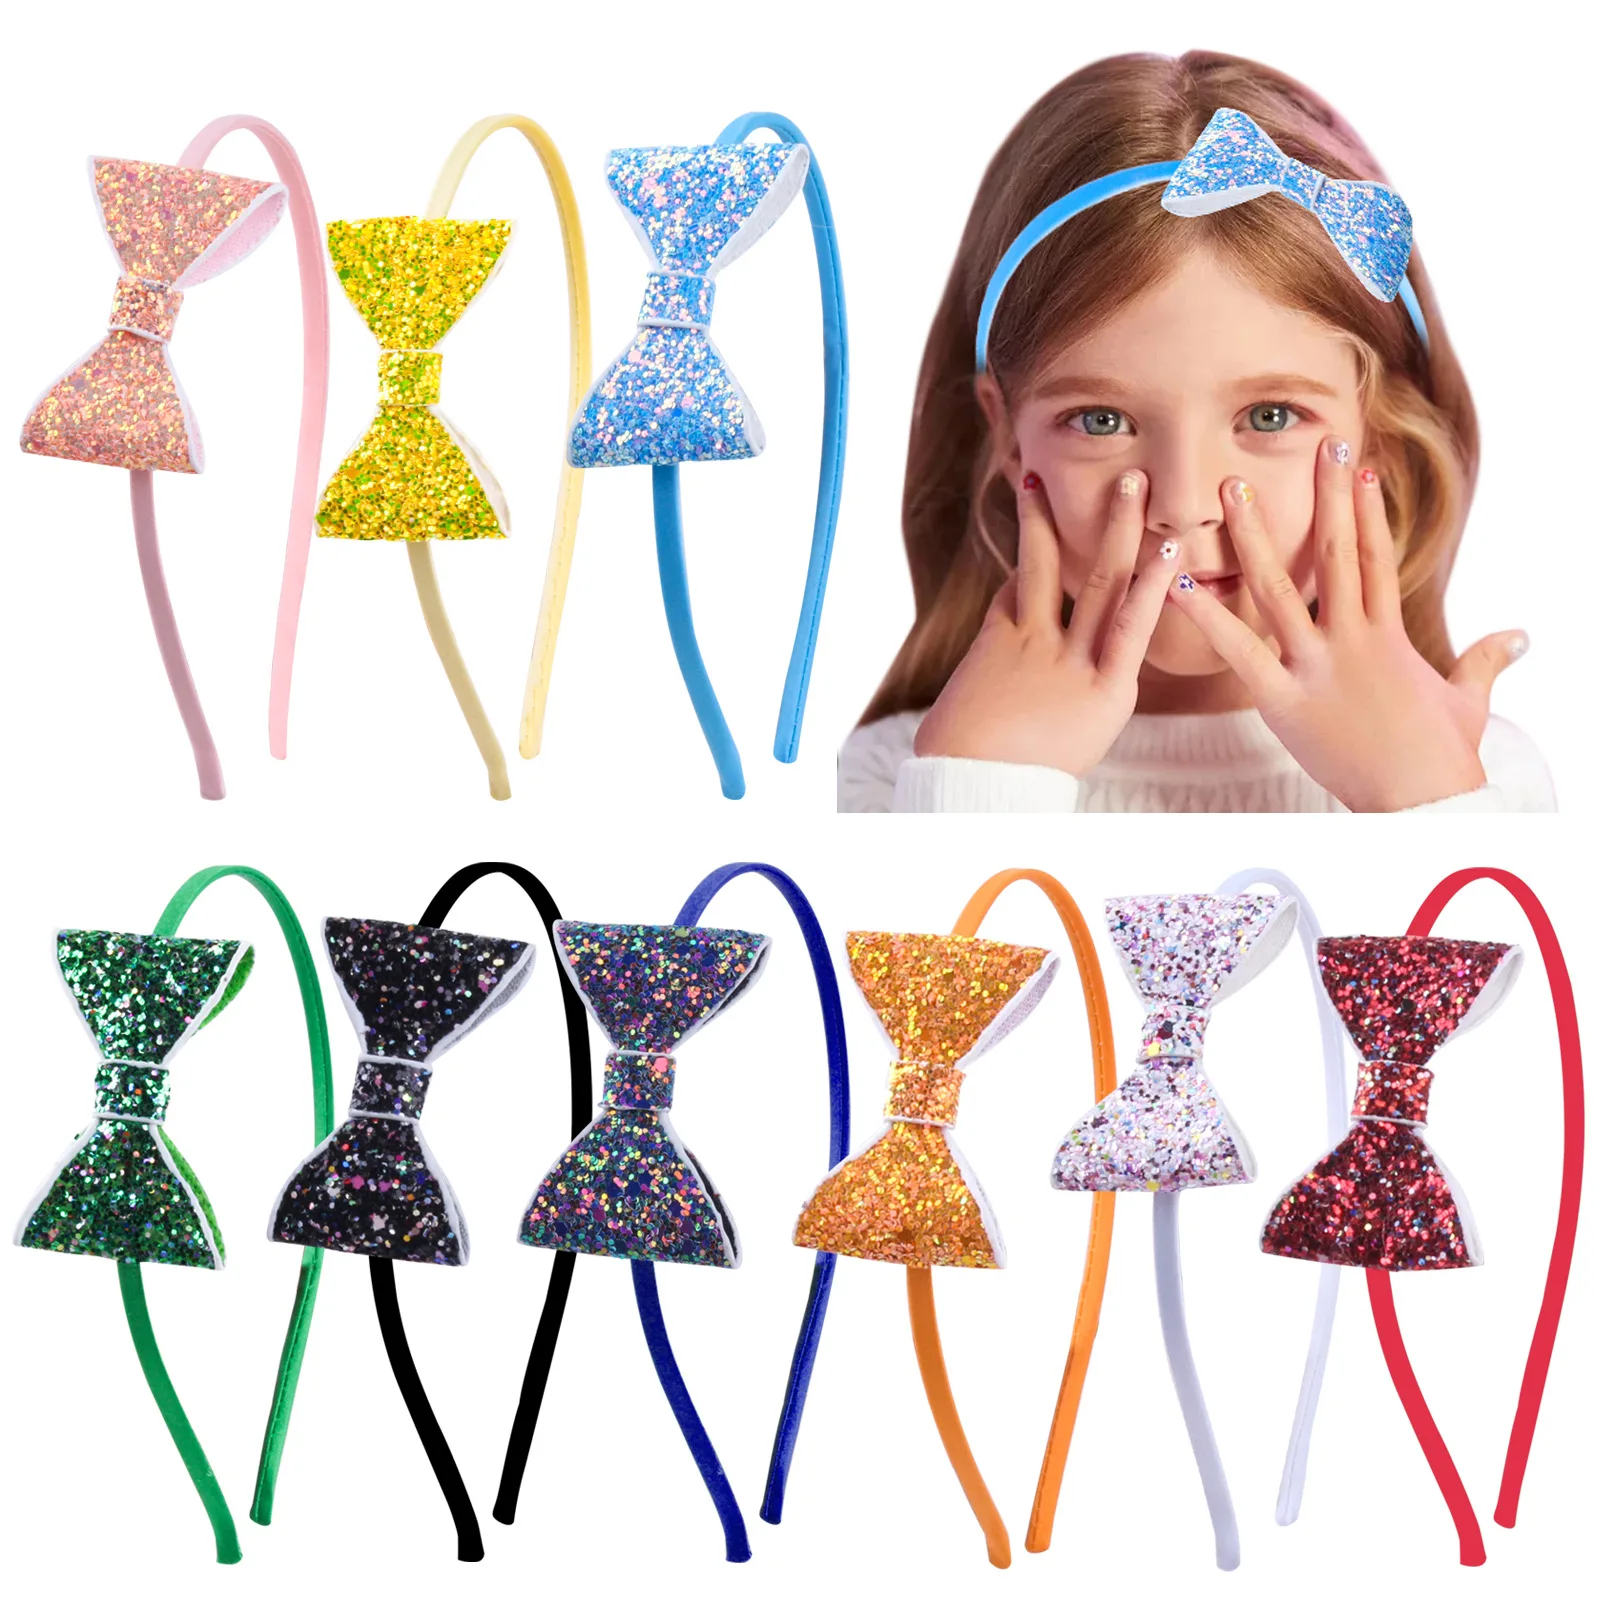 2021 New Hot Sale Shiny Cute Bow Children's Non-slip Hair Sweet Princess Accessories Girl Headband Headwear